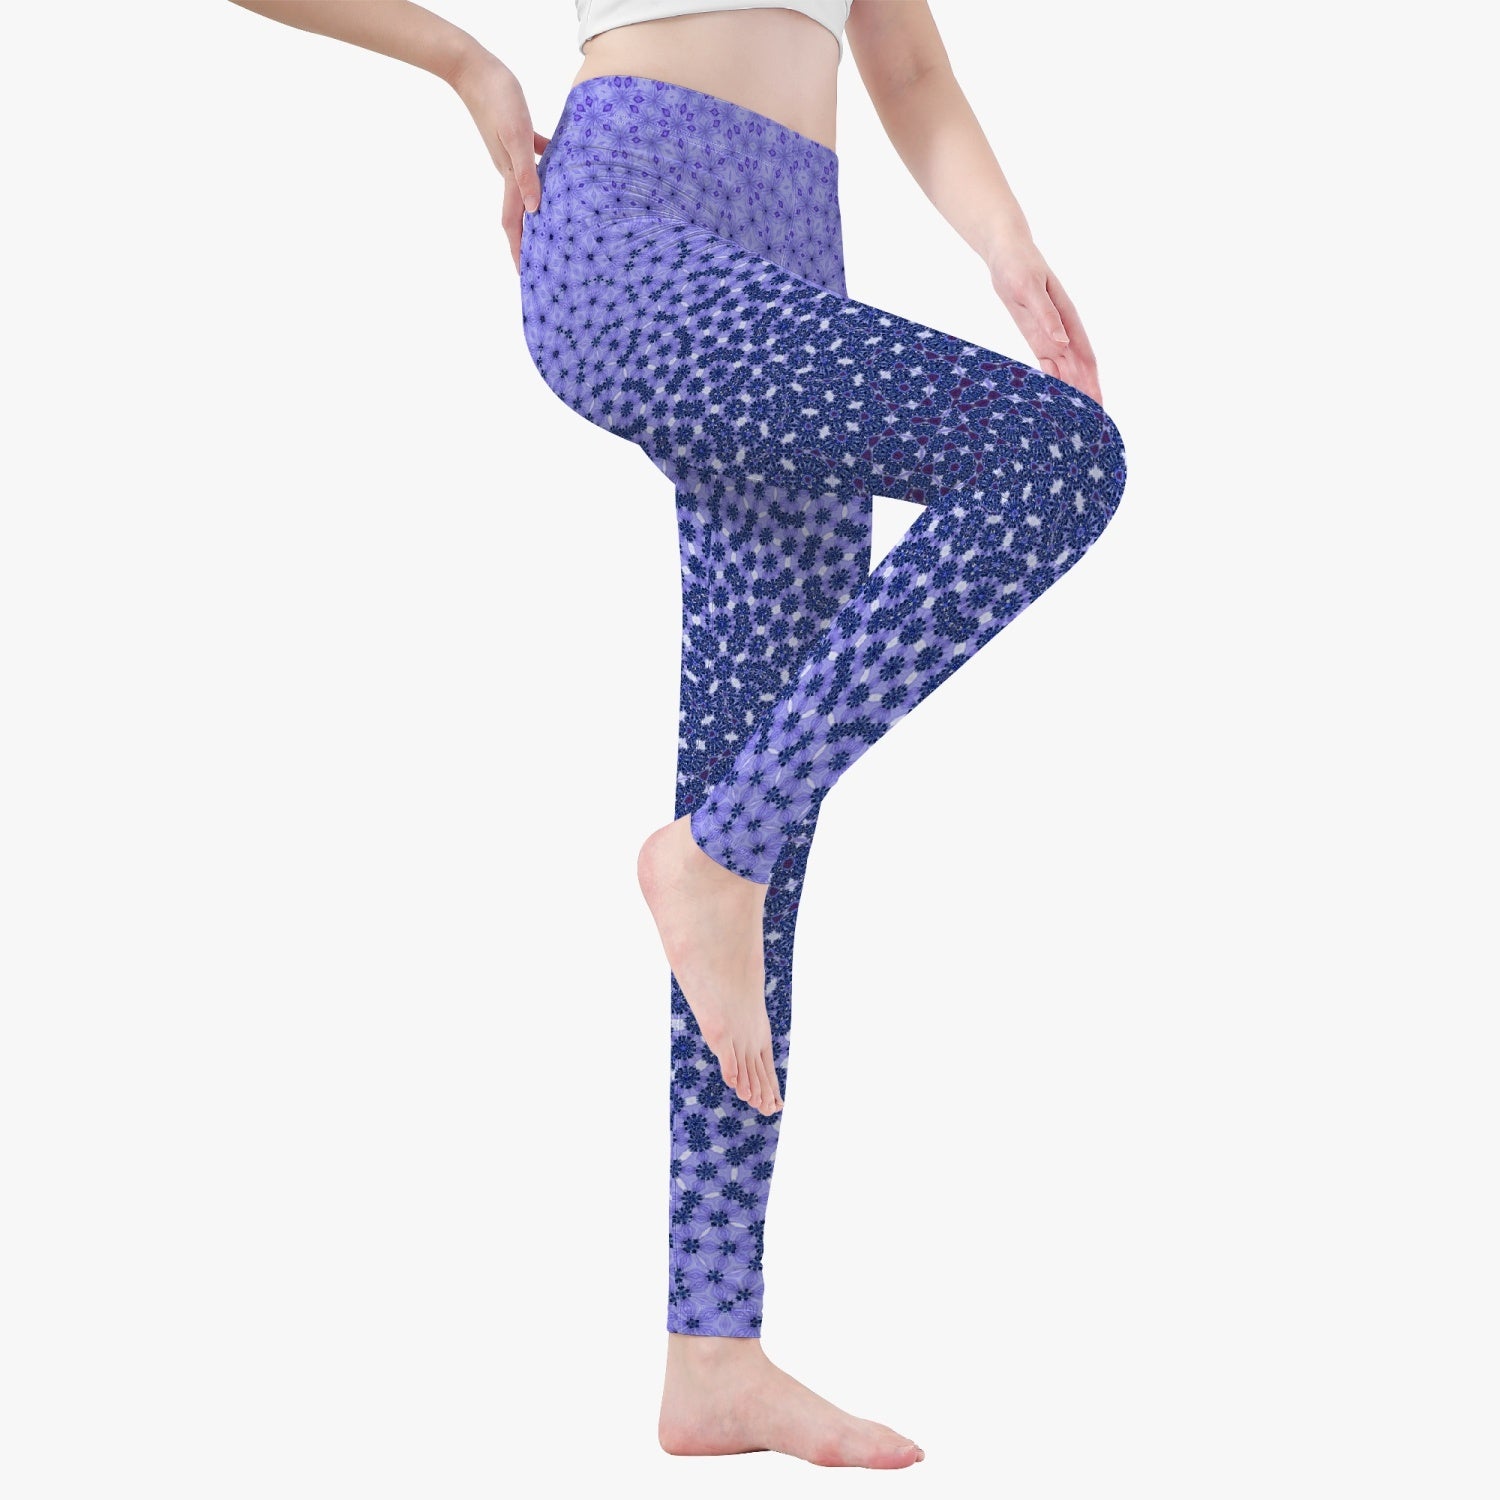 "Knowing" Crown Chacra Yoga Pants, by Sensus Studio Design